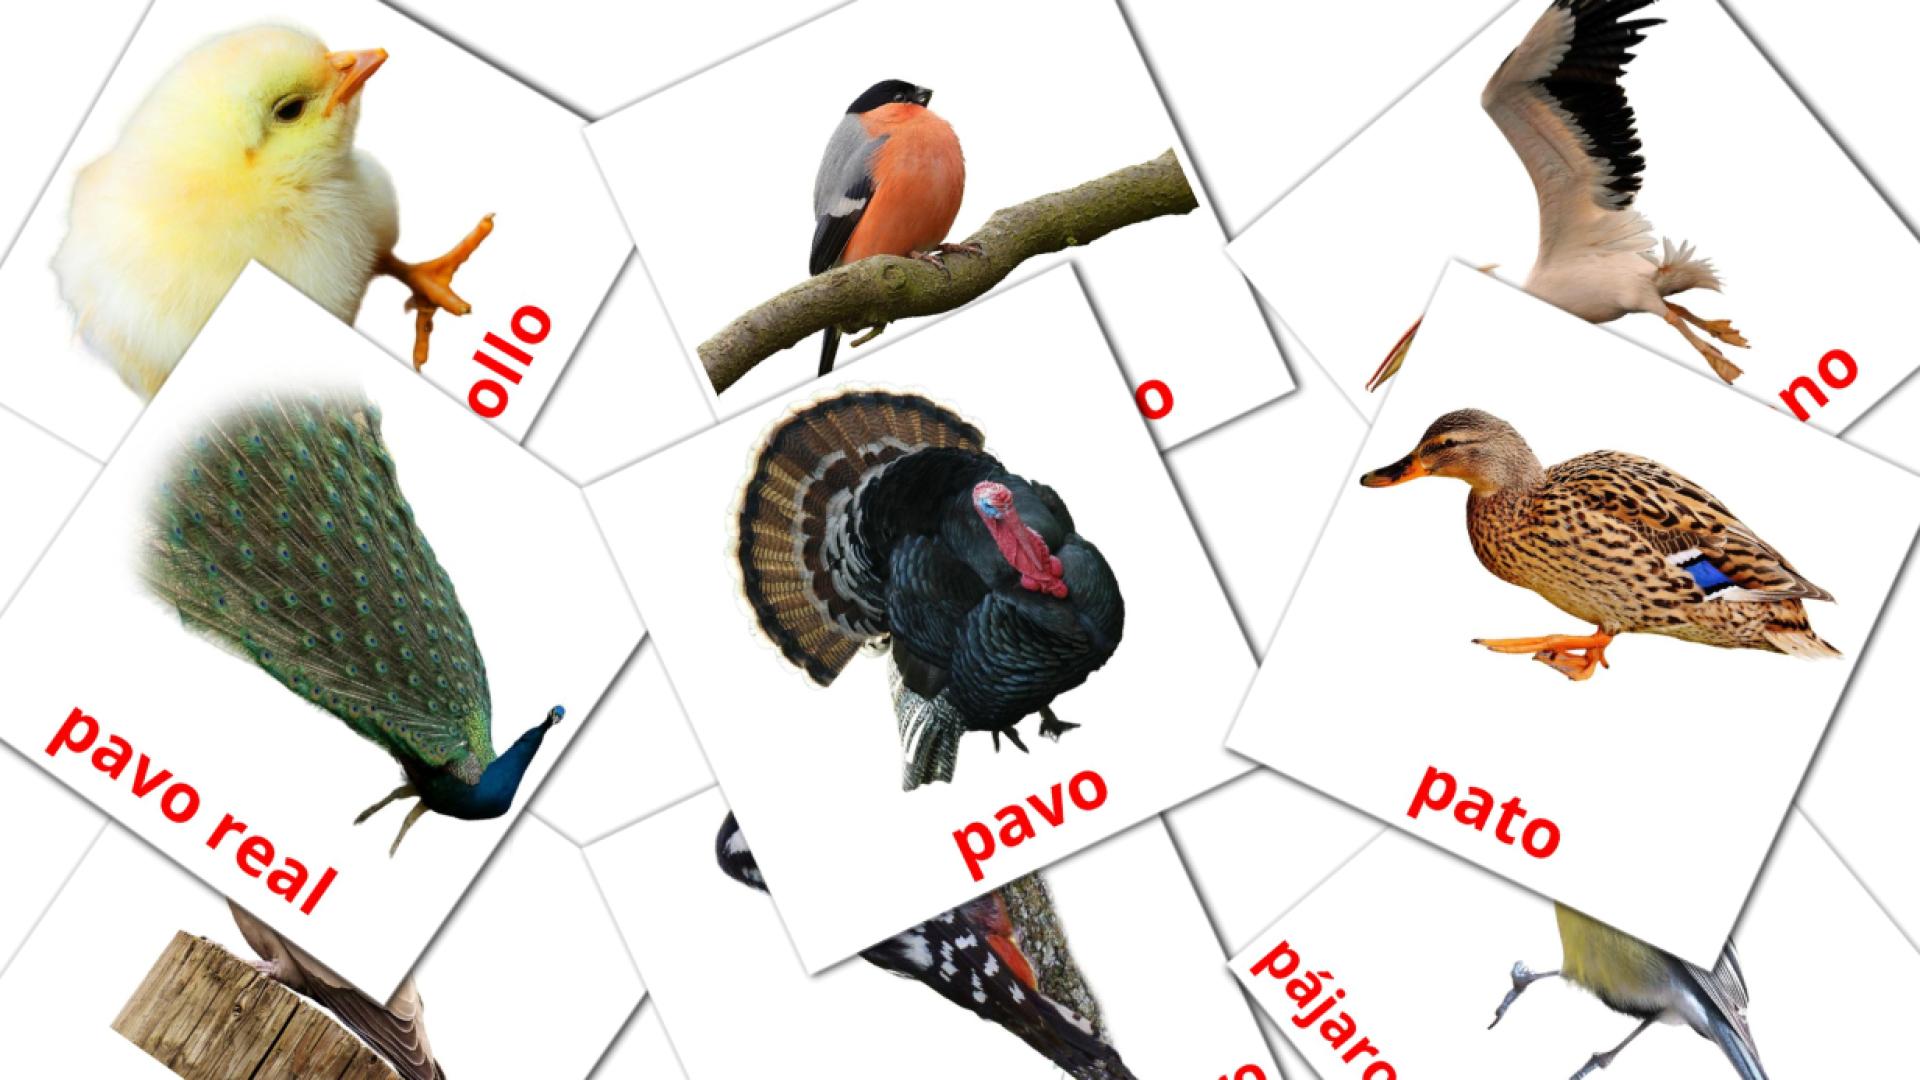 punjabi(gurmukhi) tarjetas de vocabulario en Aves